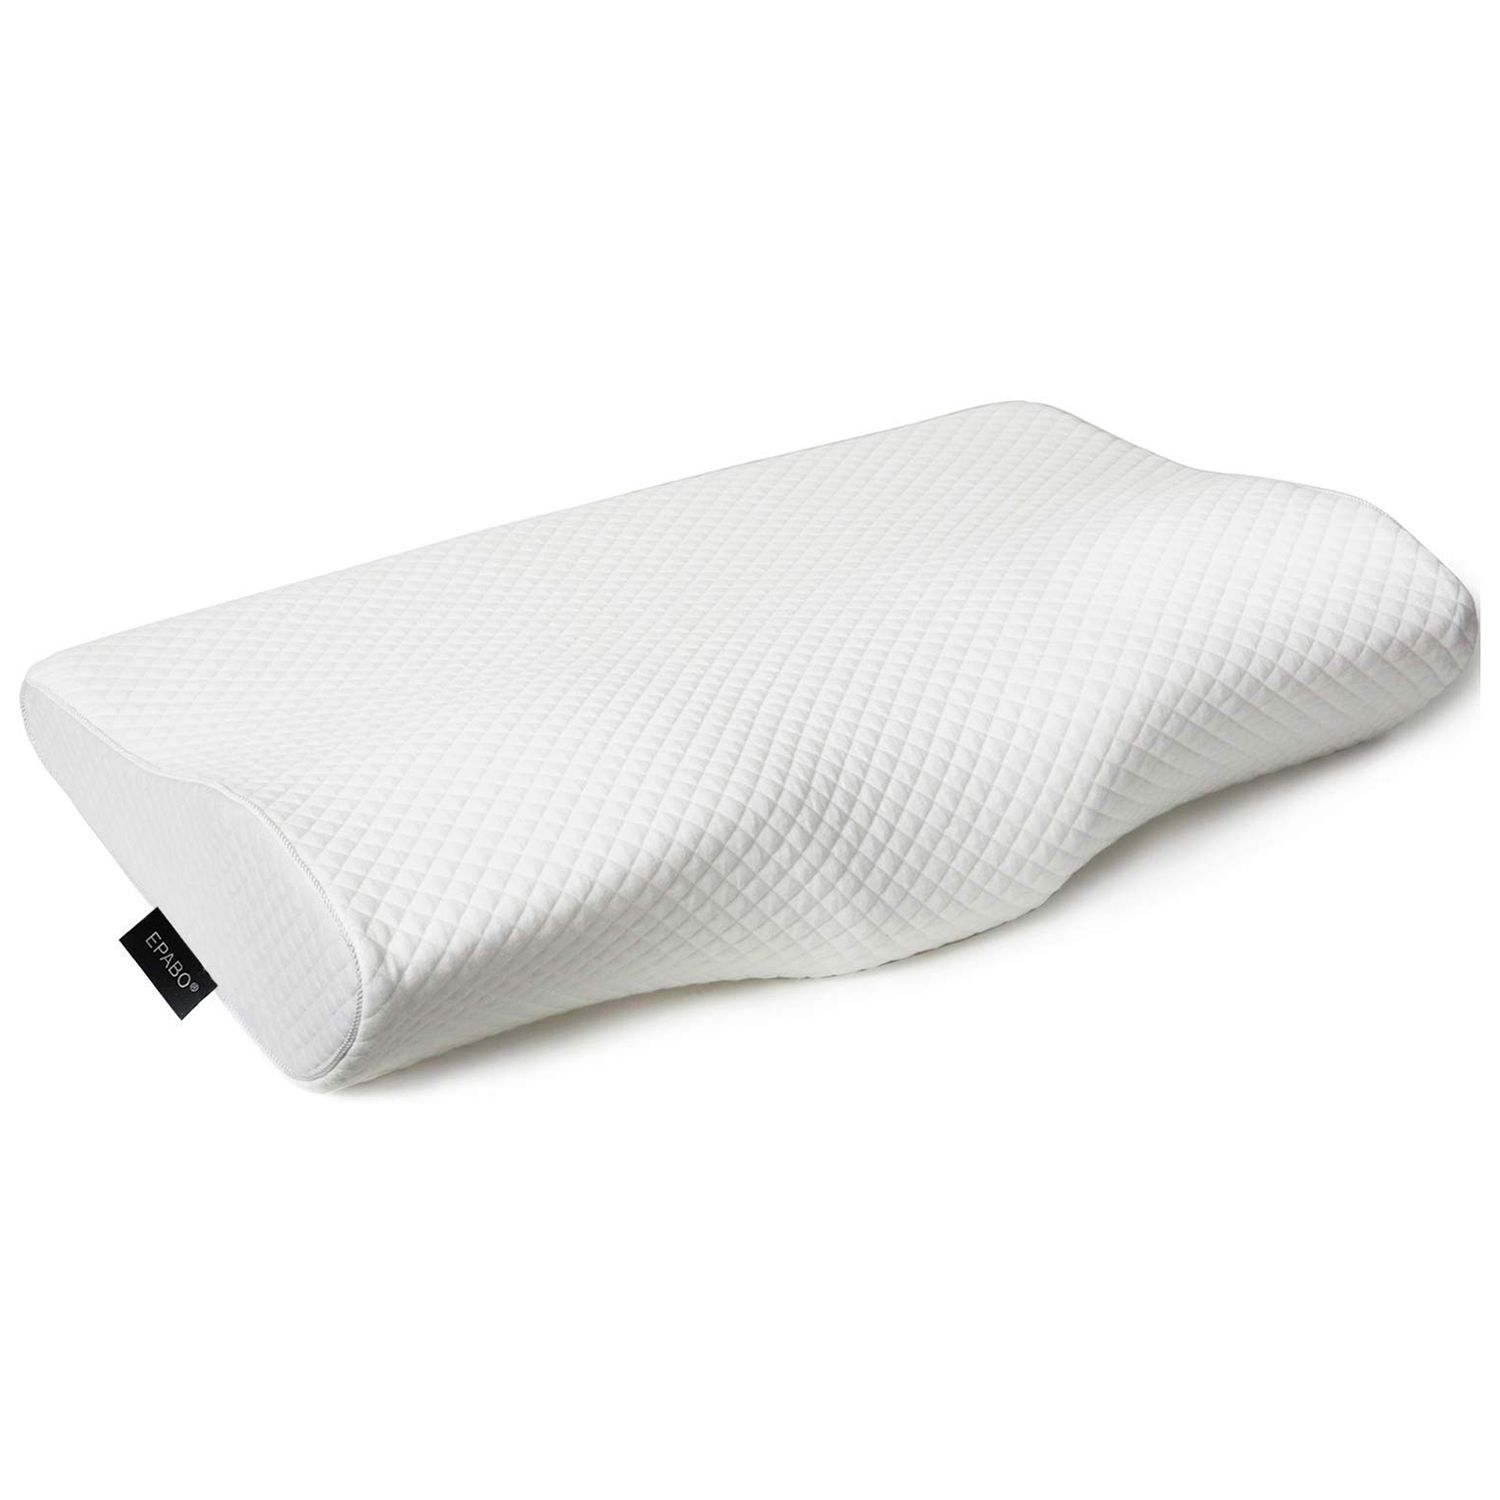 EPABO Contour Memory Foam Pillow Orthopedic